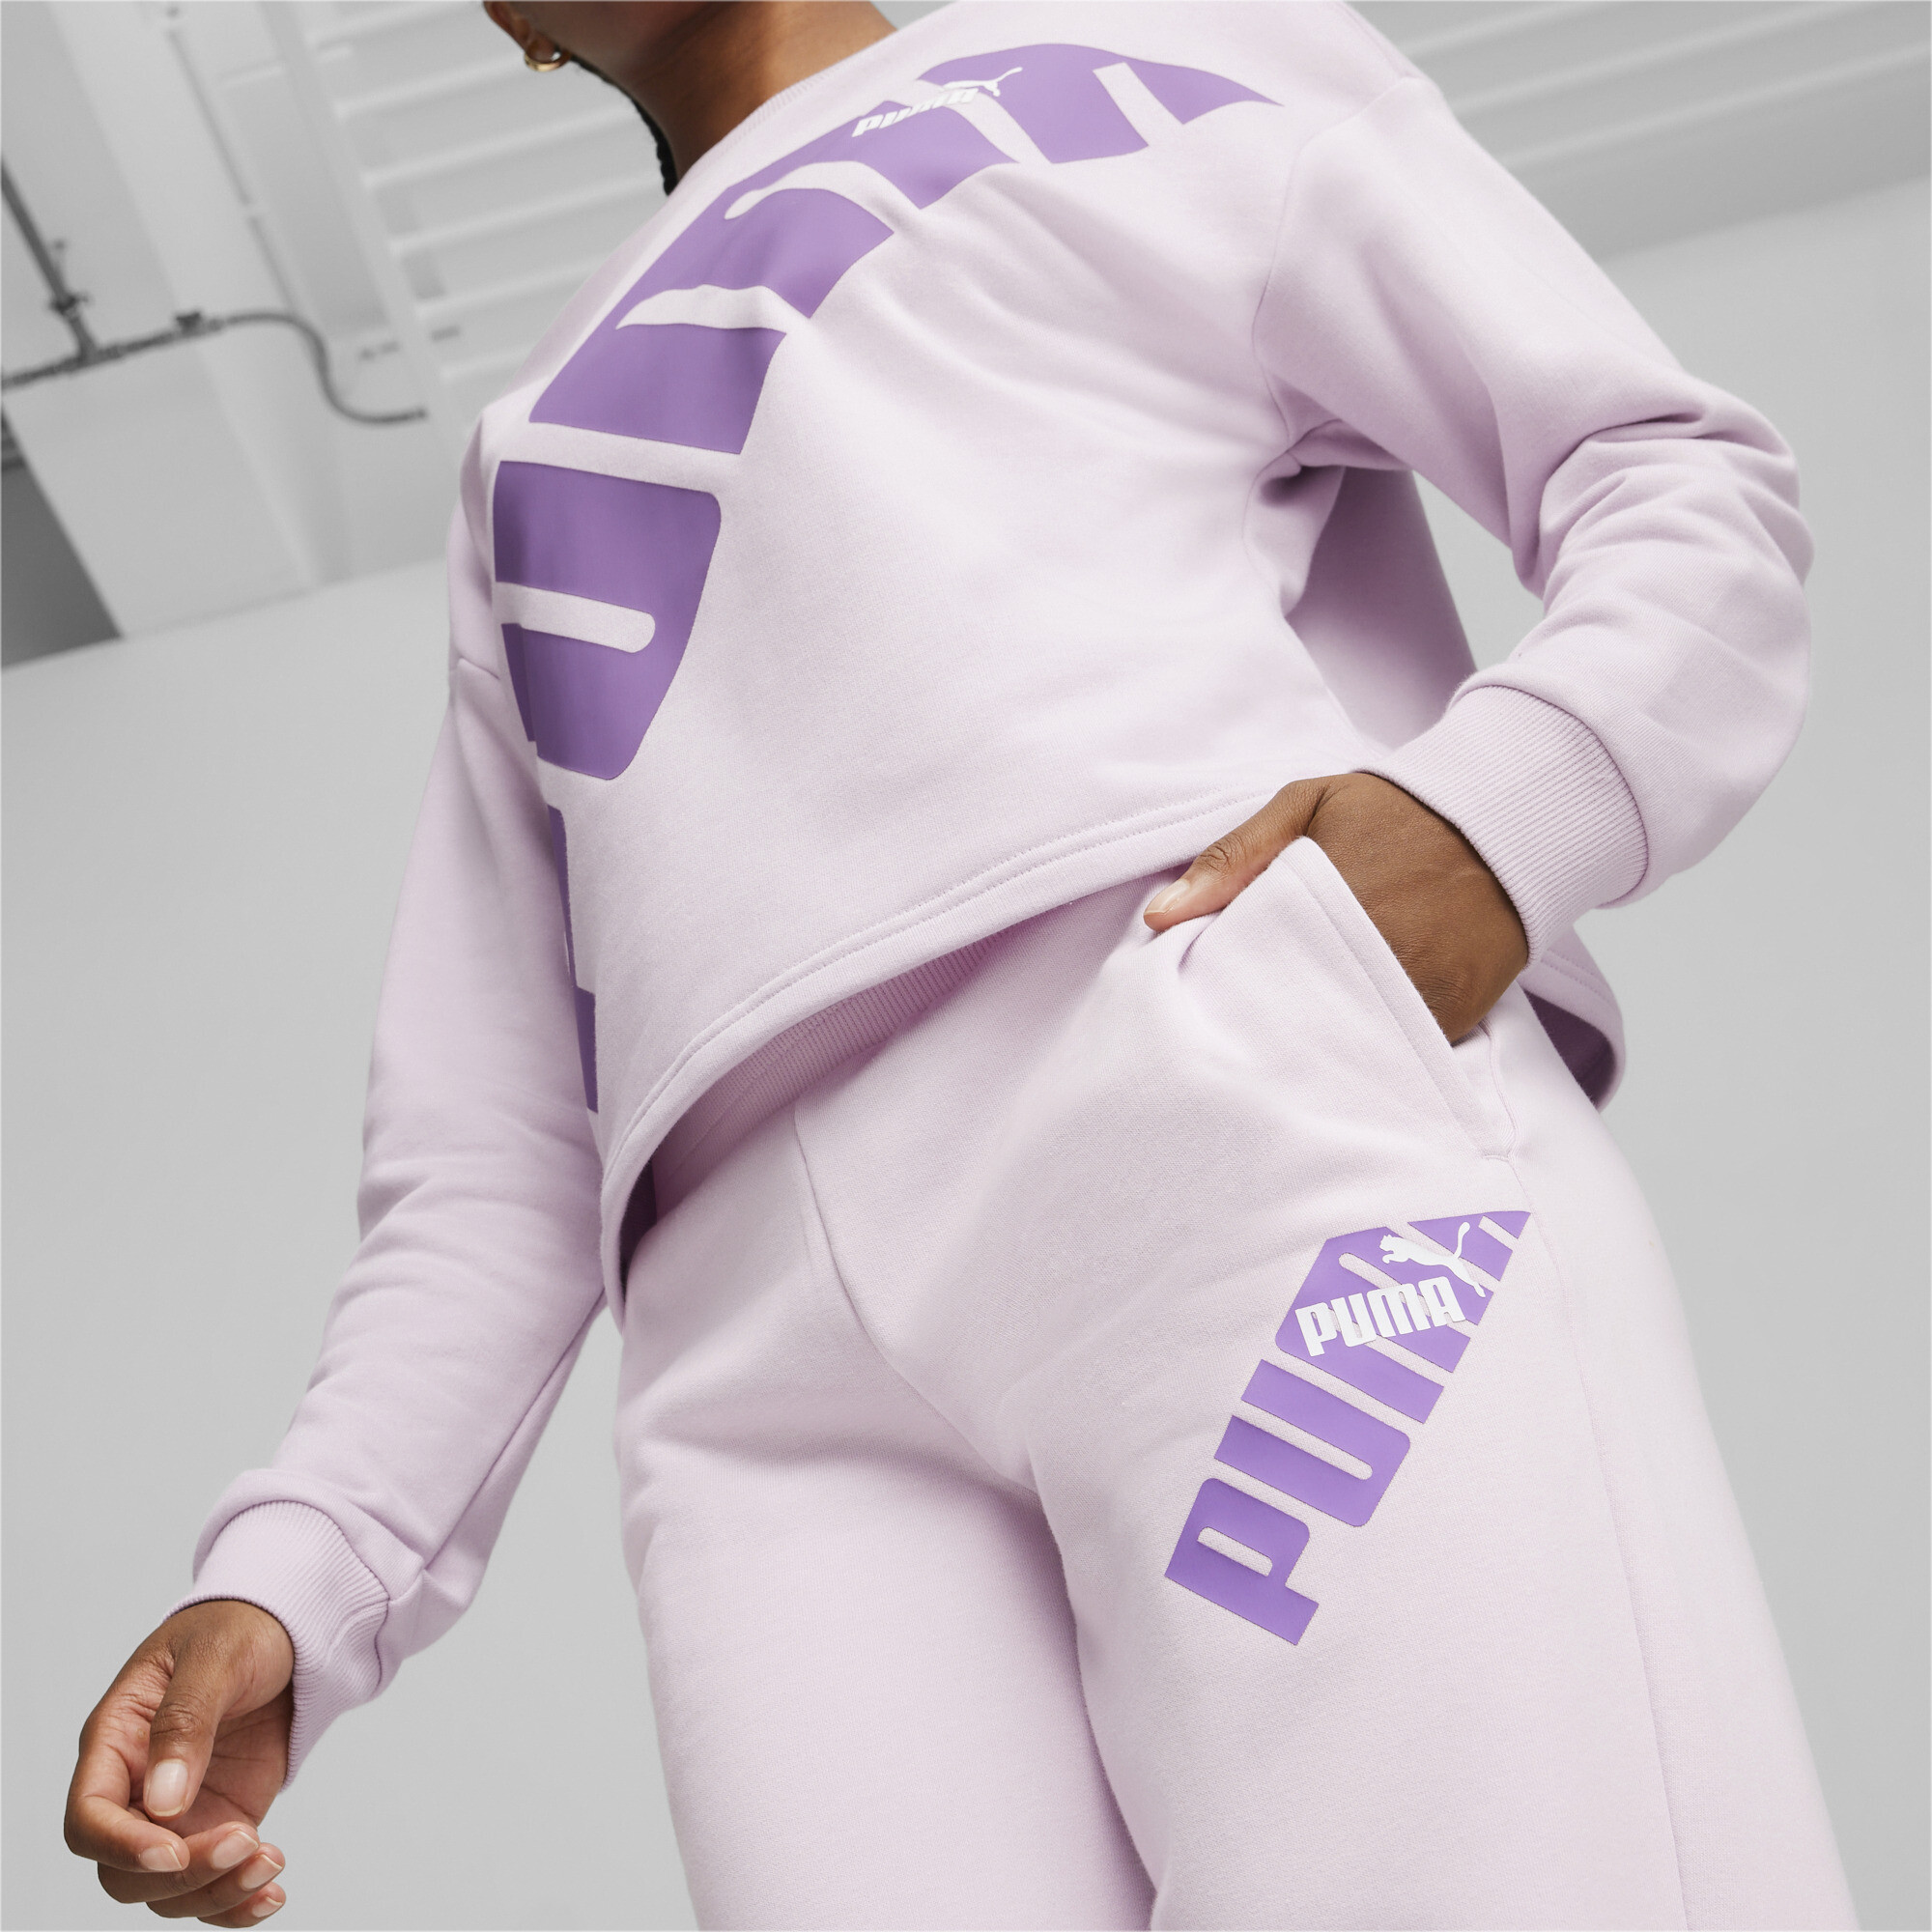 Women's PUMA POWER Pants In Purple, Size Medium